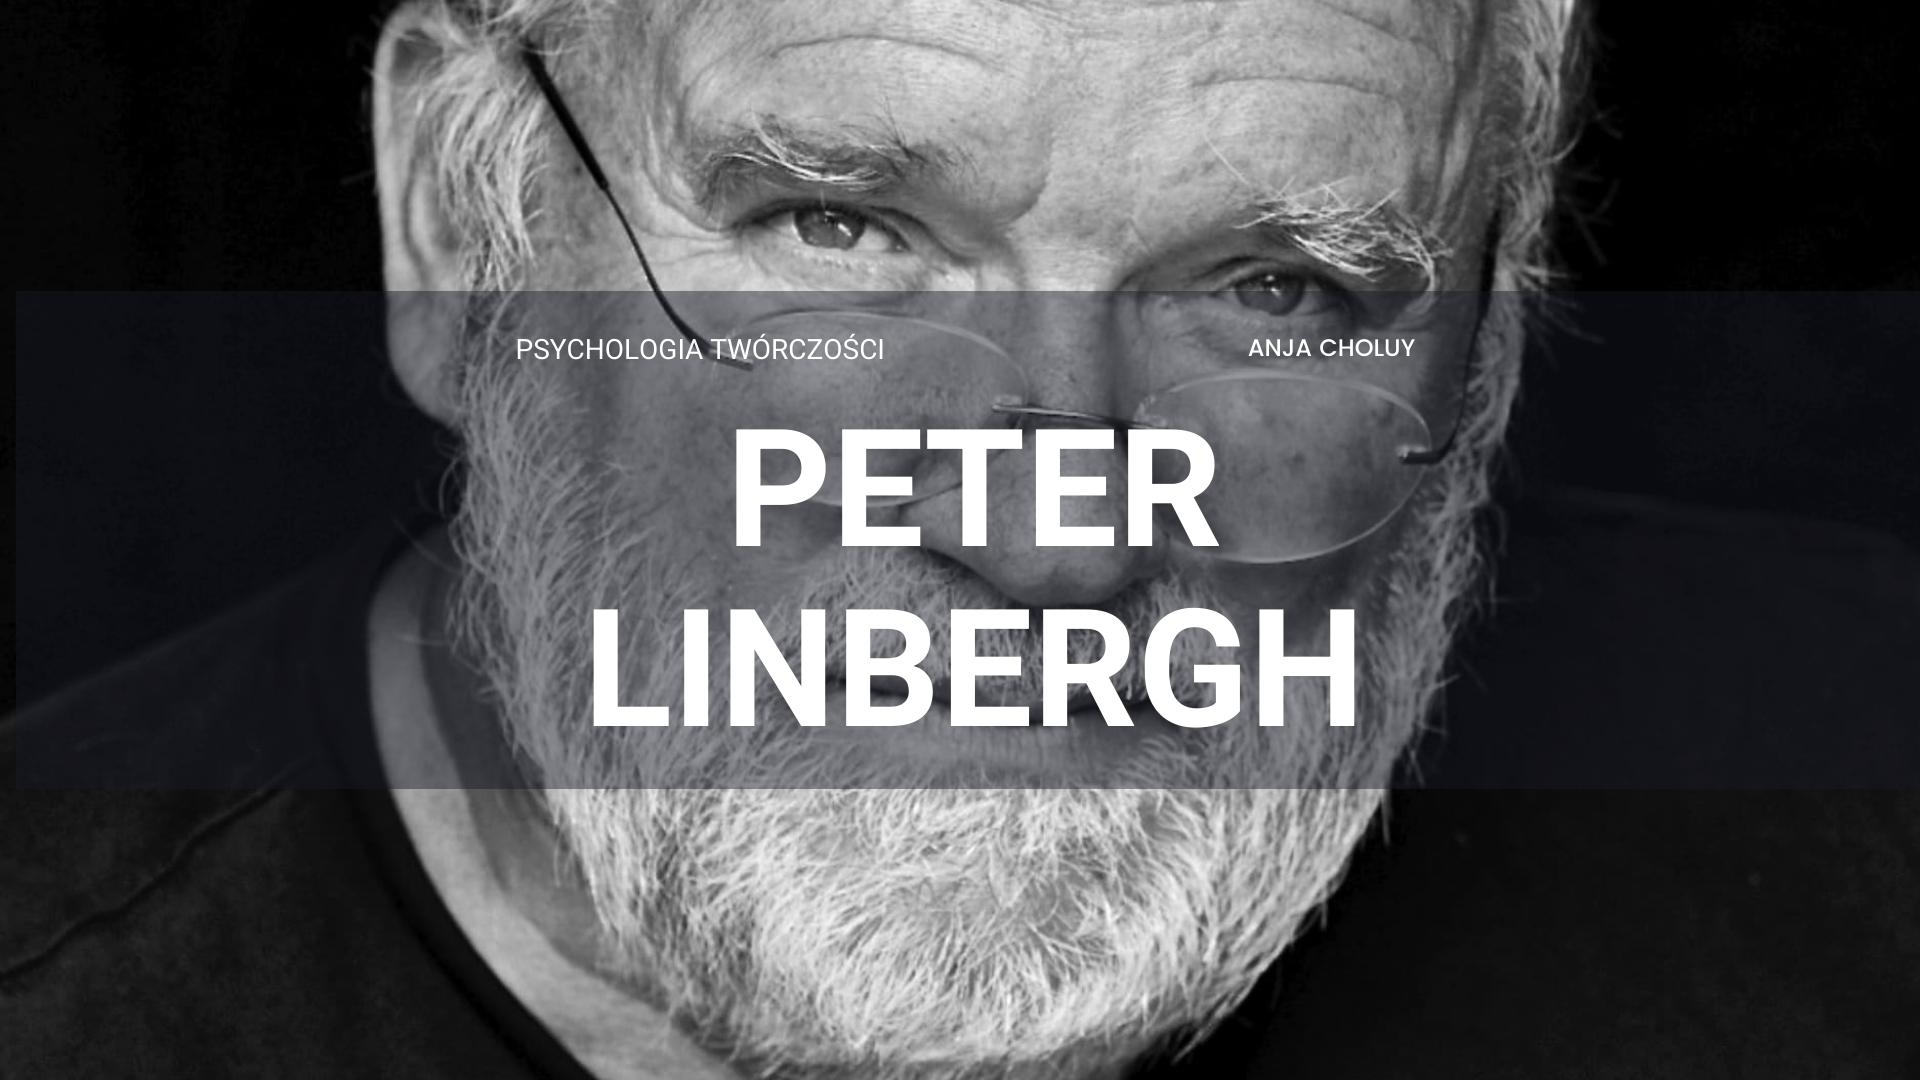 PETER LINBERGH